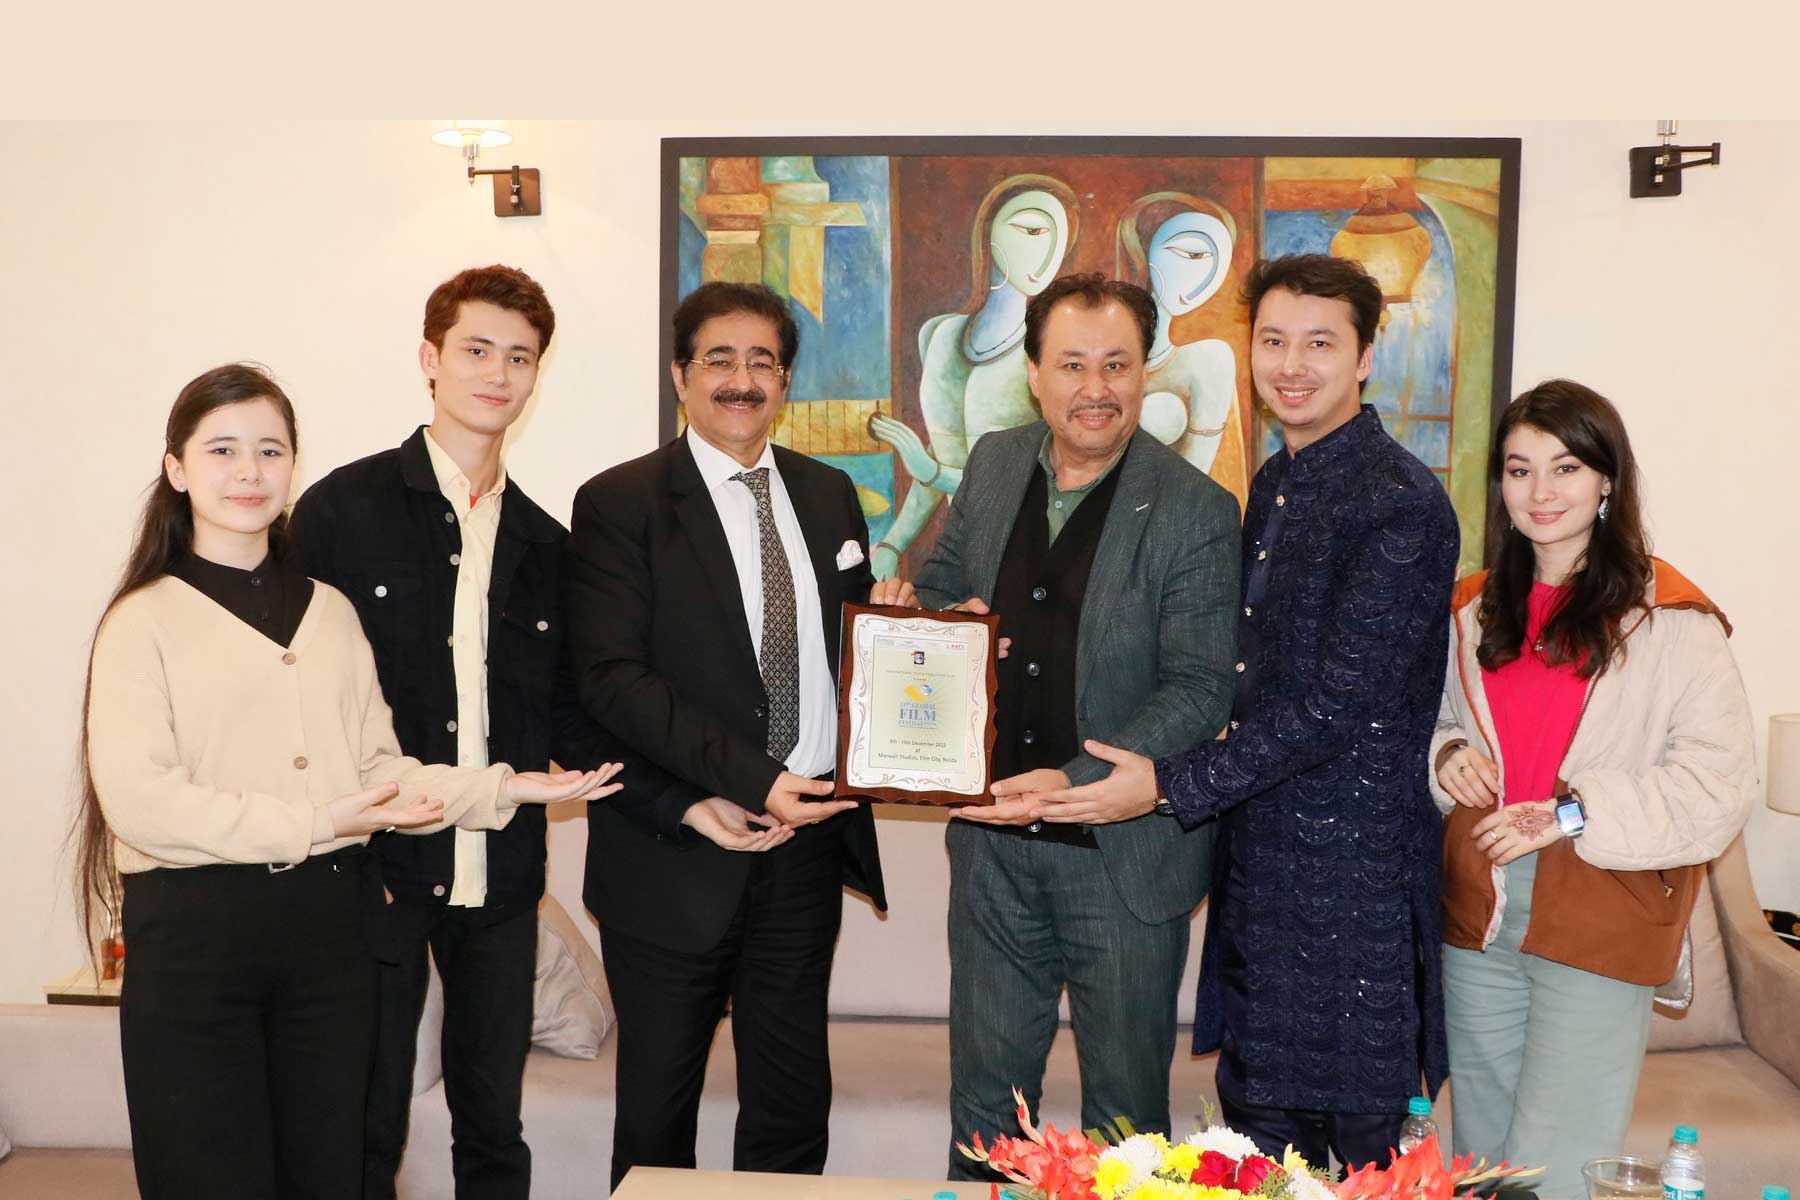 President Sandeep Marwah Sir with Havas Guruhi from Uzbekistan Musical group